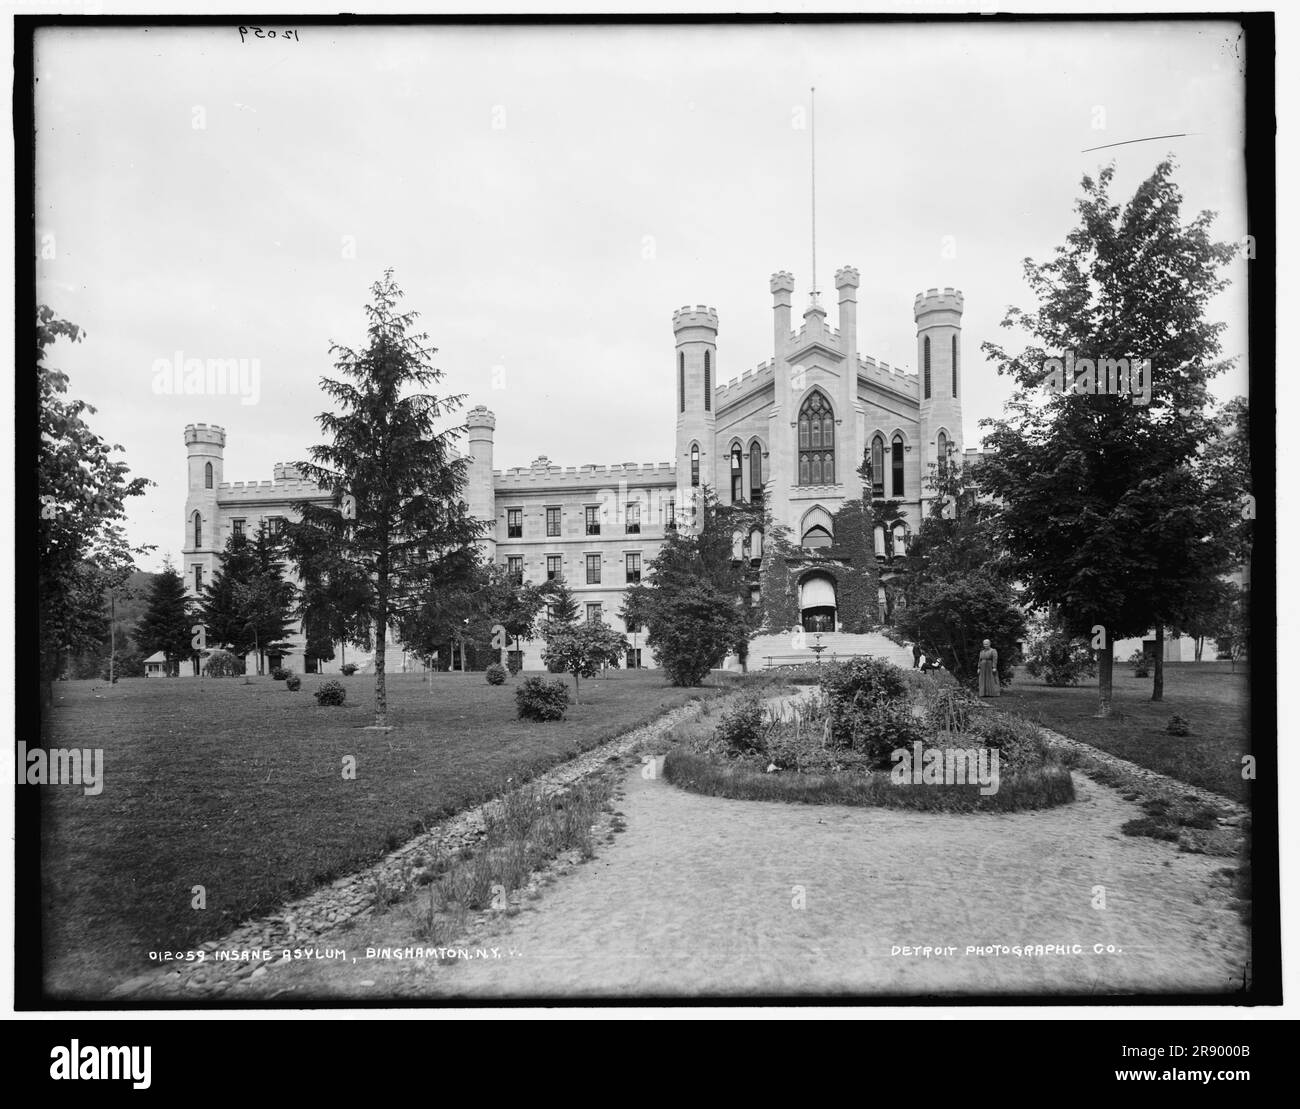 Insane asylum, Binghamton, N.Y., between 1890 and 1901. Stock Photo